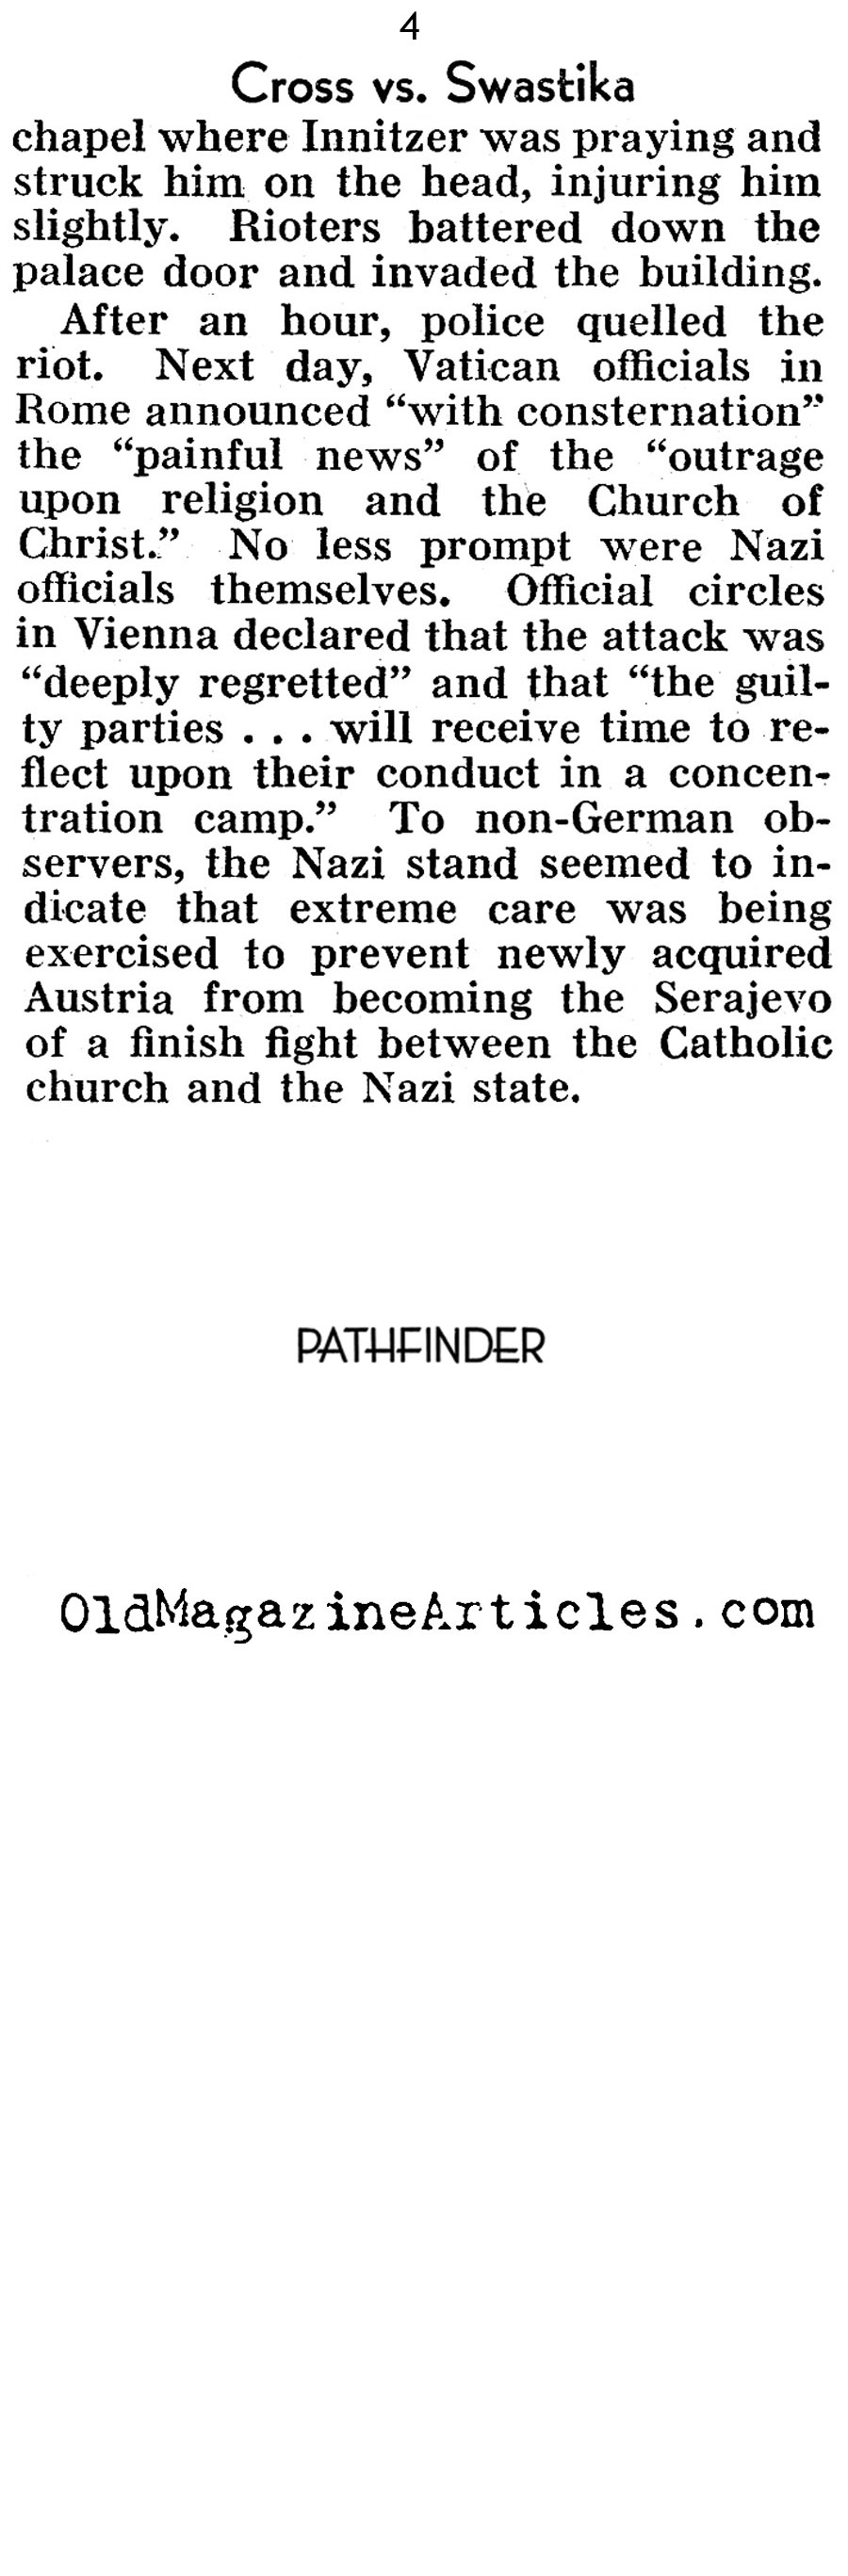 Cardinal Innitzer Stands Up (Pathfinder Magazine, 1938)